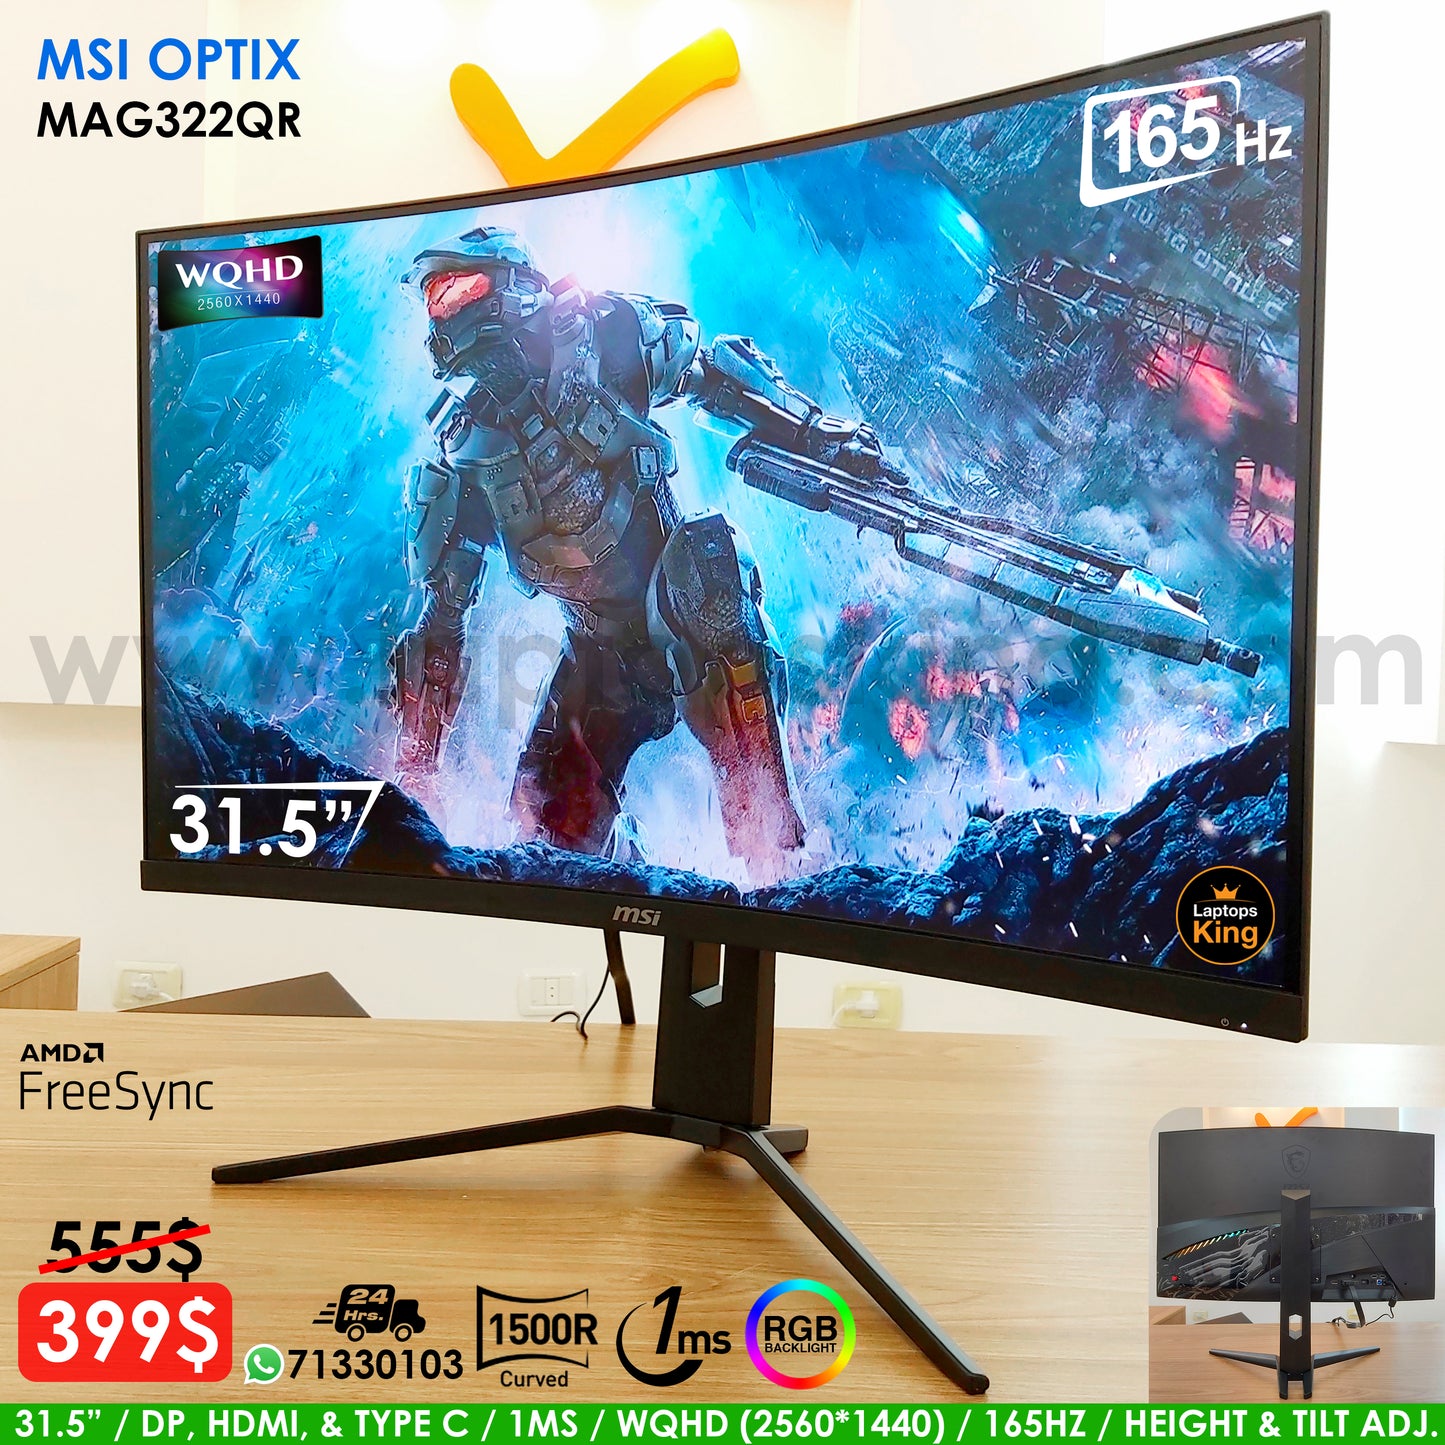 MSI Optix MAG322QR 31.5" WQHD 165Hz Curved Gaming Monitor (New Open Box)